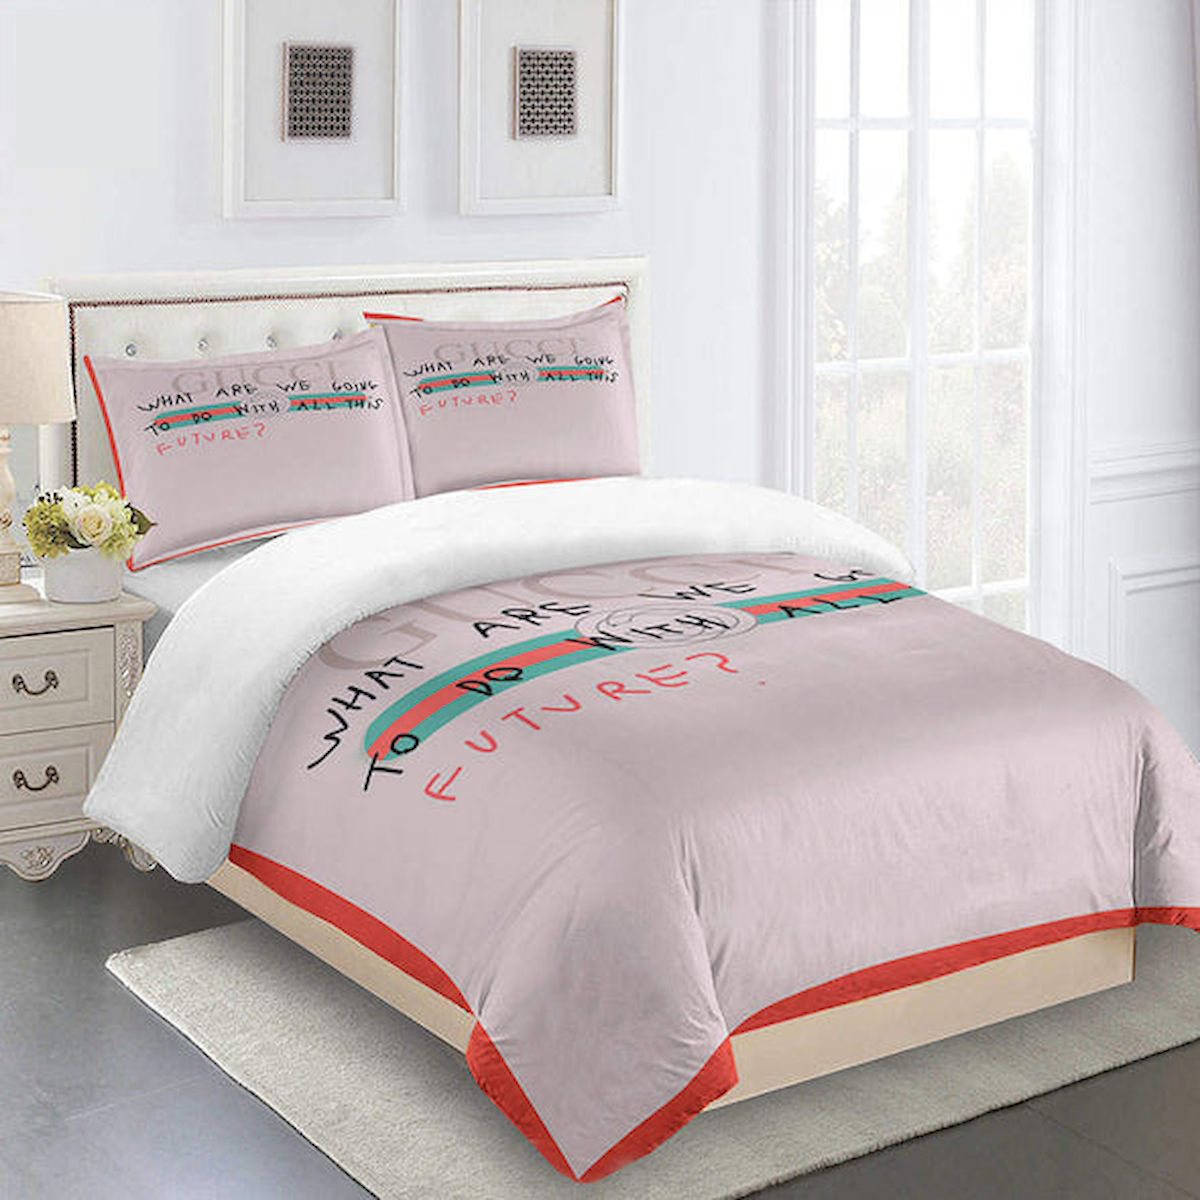 GC Pink Luxury Brand High-End Bedding Set Home Decor HT